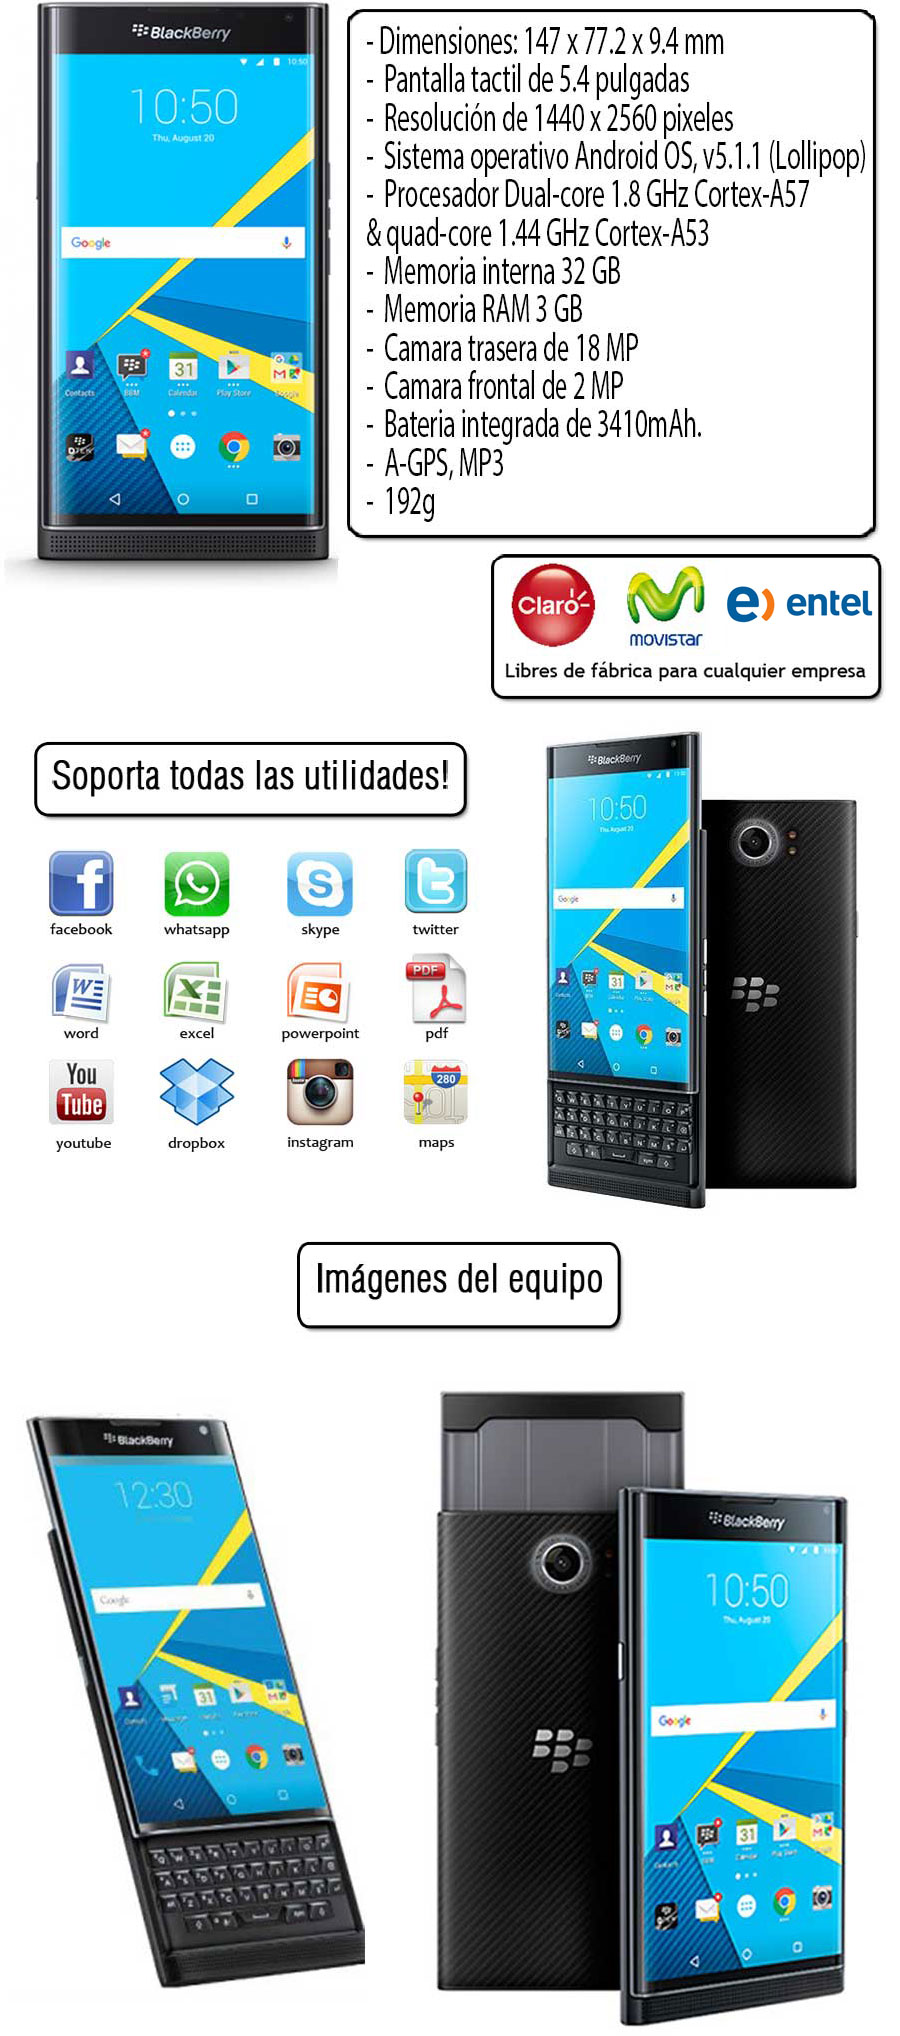 blackberry-priv-mercado-libre.jpg  by erubio24